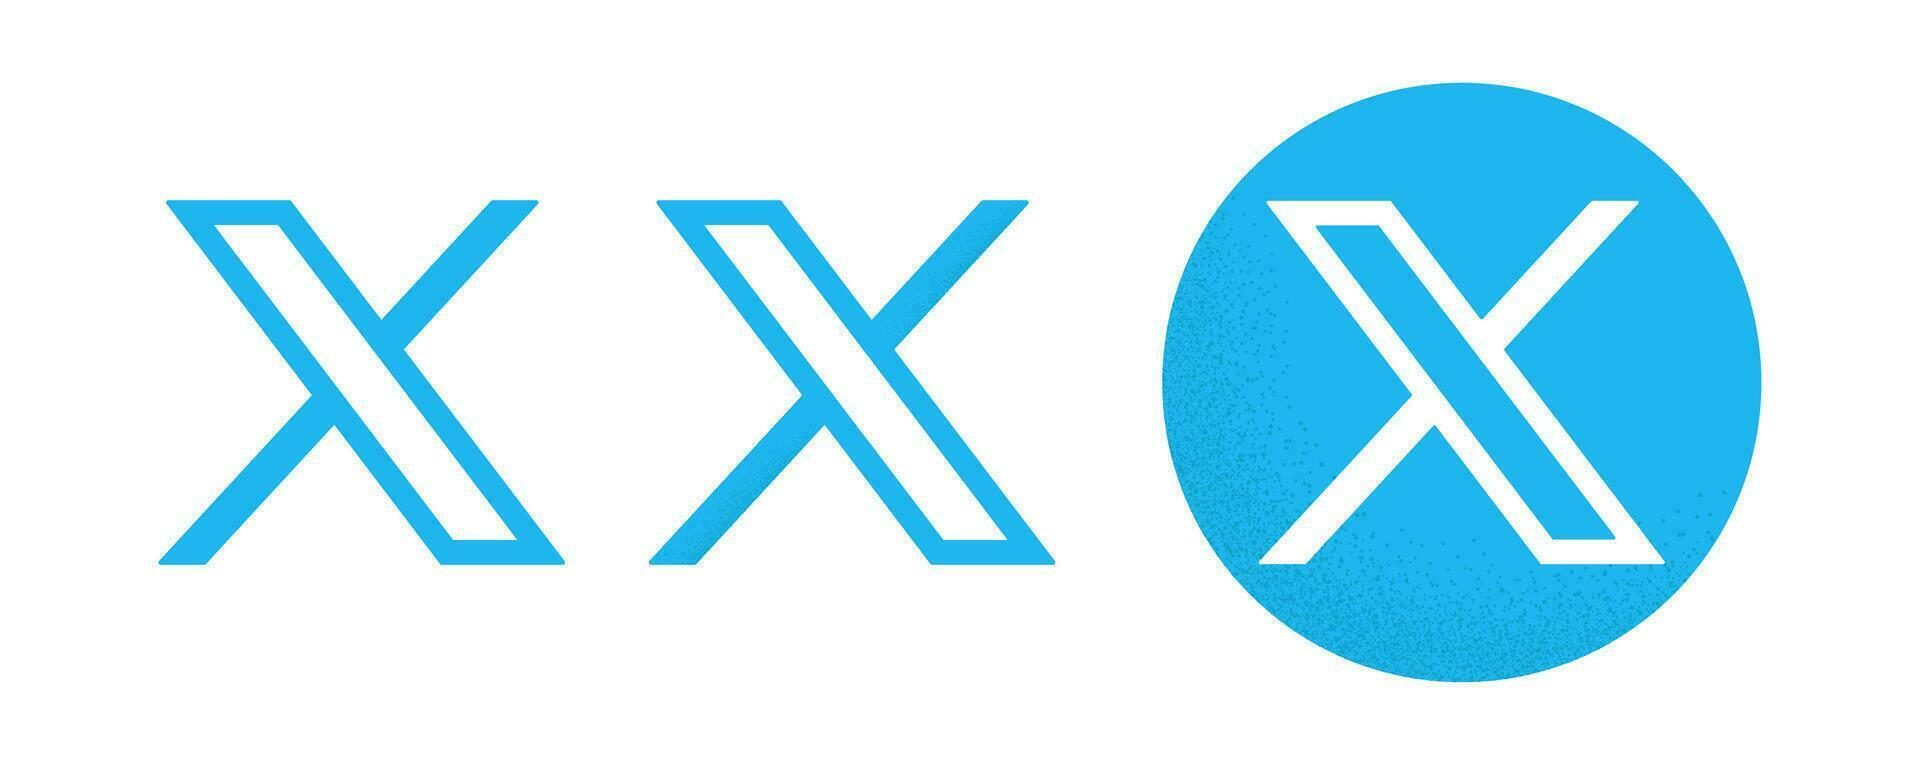 Twitter Blau Neu Logos mit Korn Textur vektor